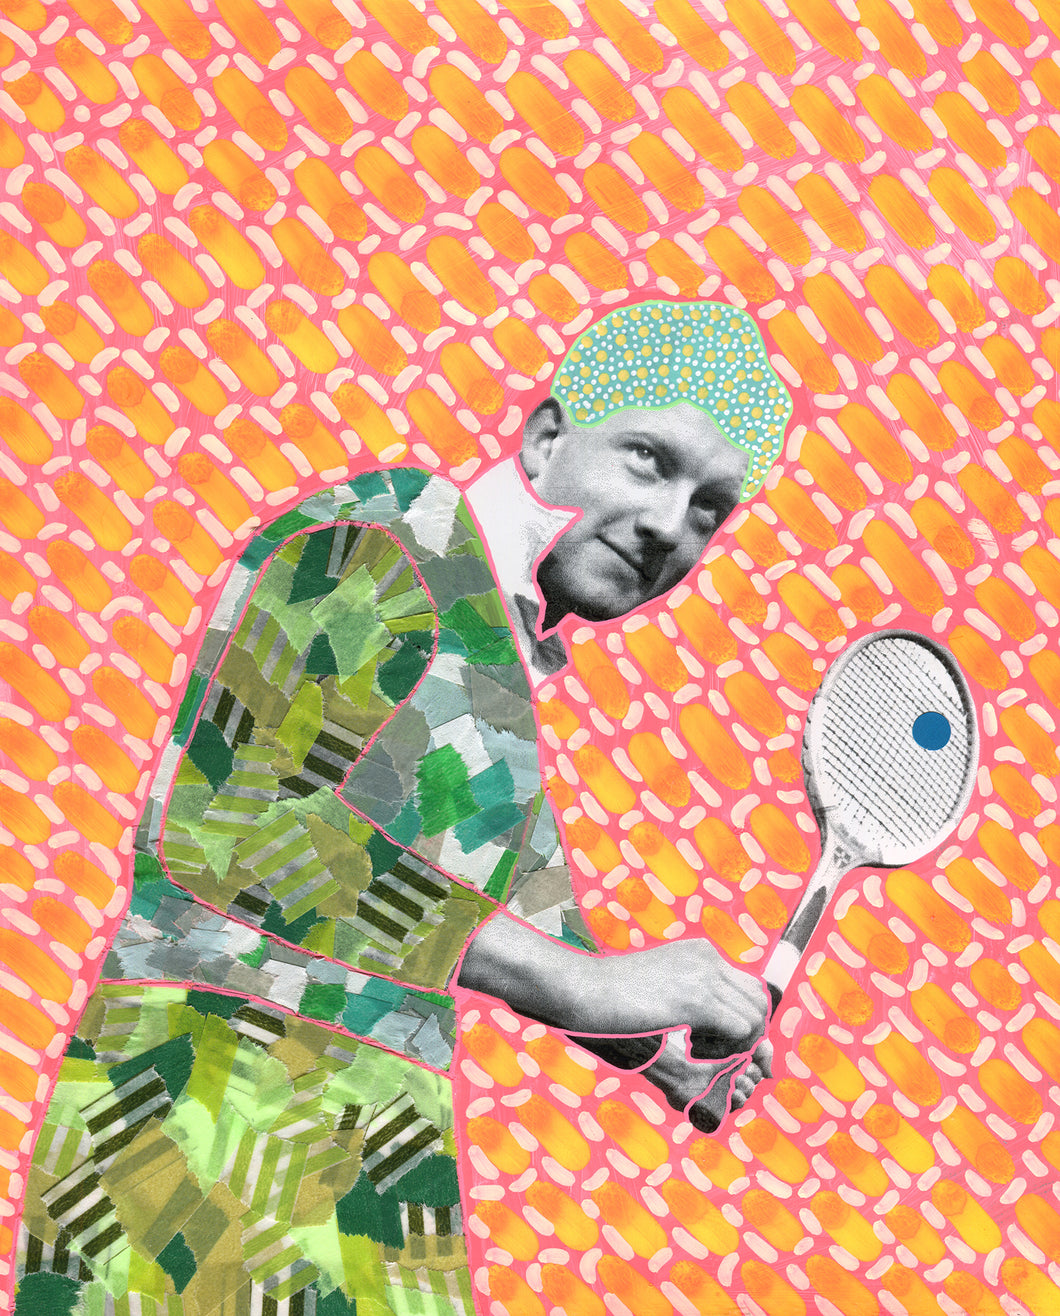 Original Old Fashioned Tennis Photo Altered By Hand - Naomi Vona Art